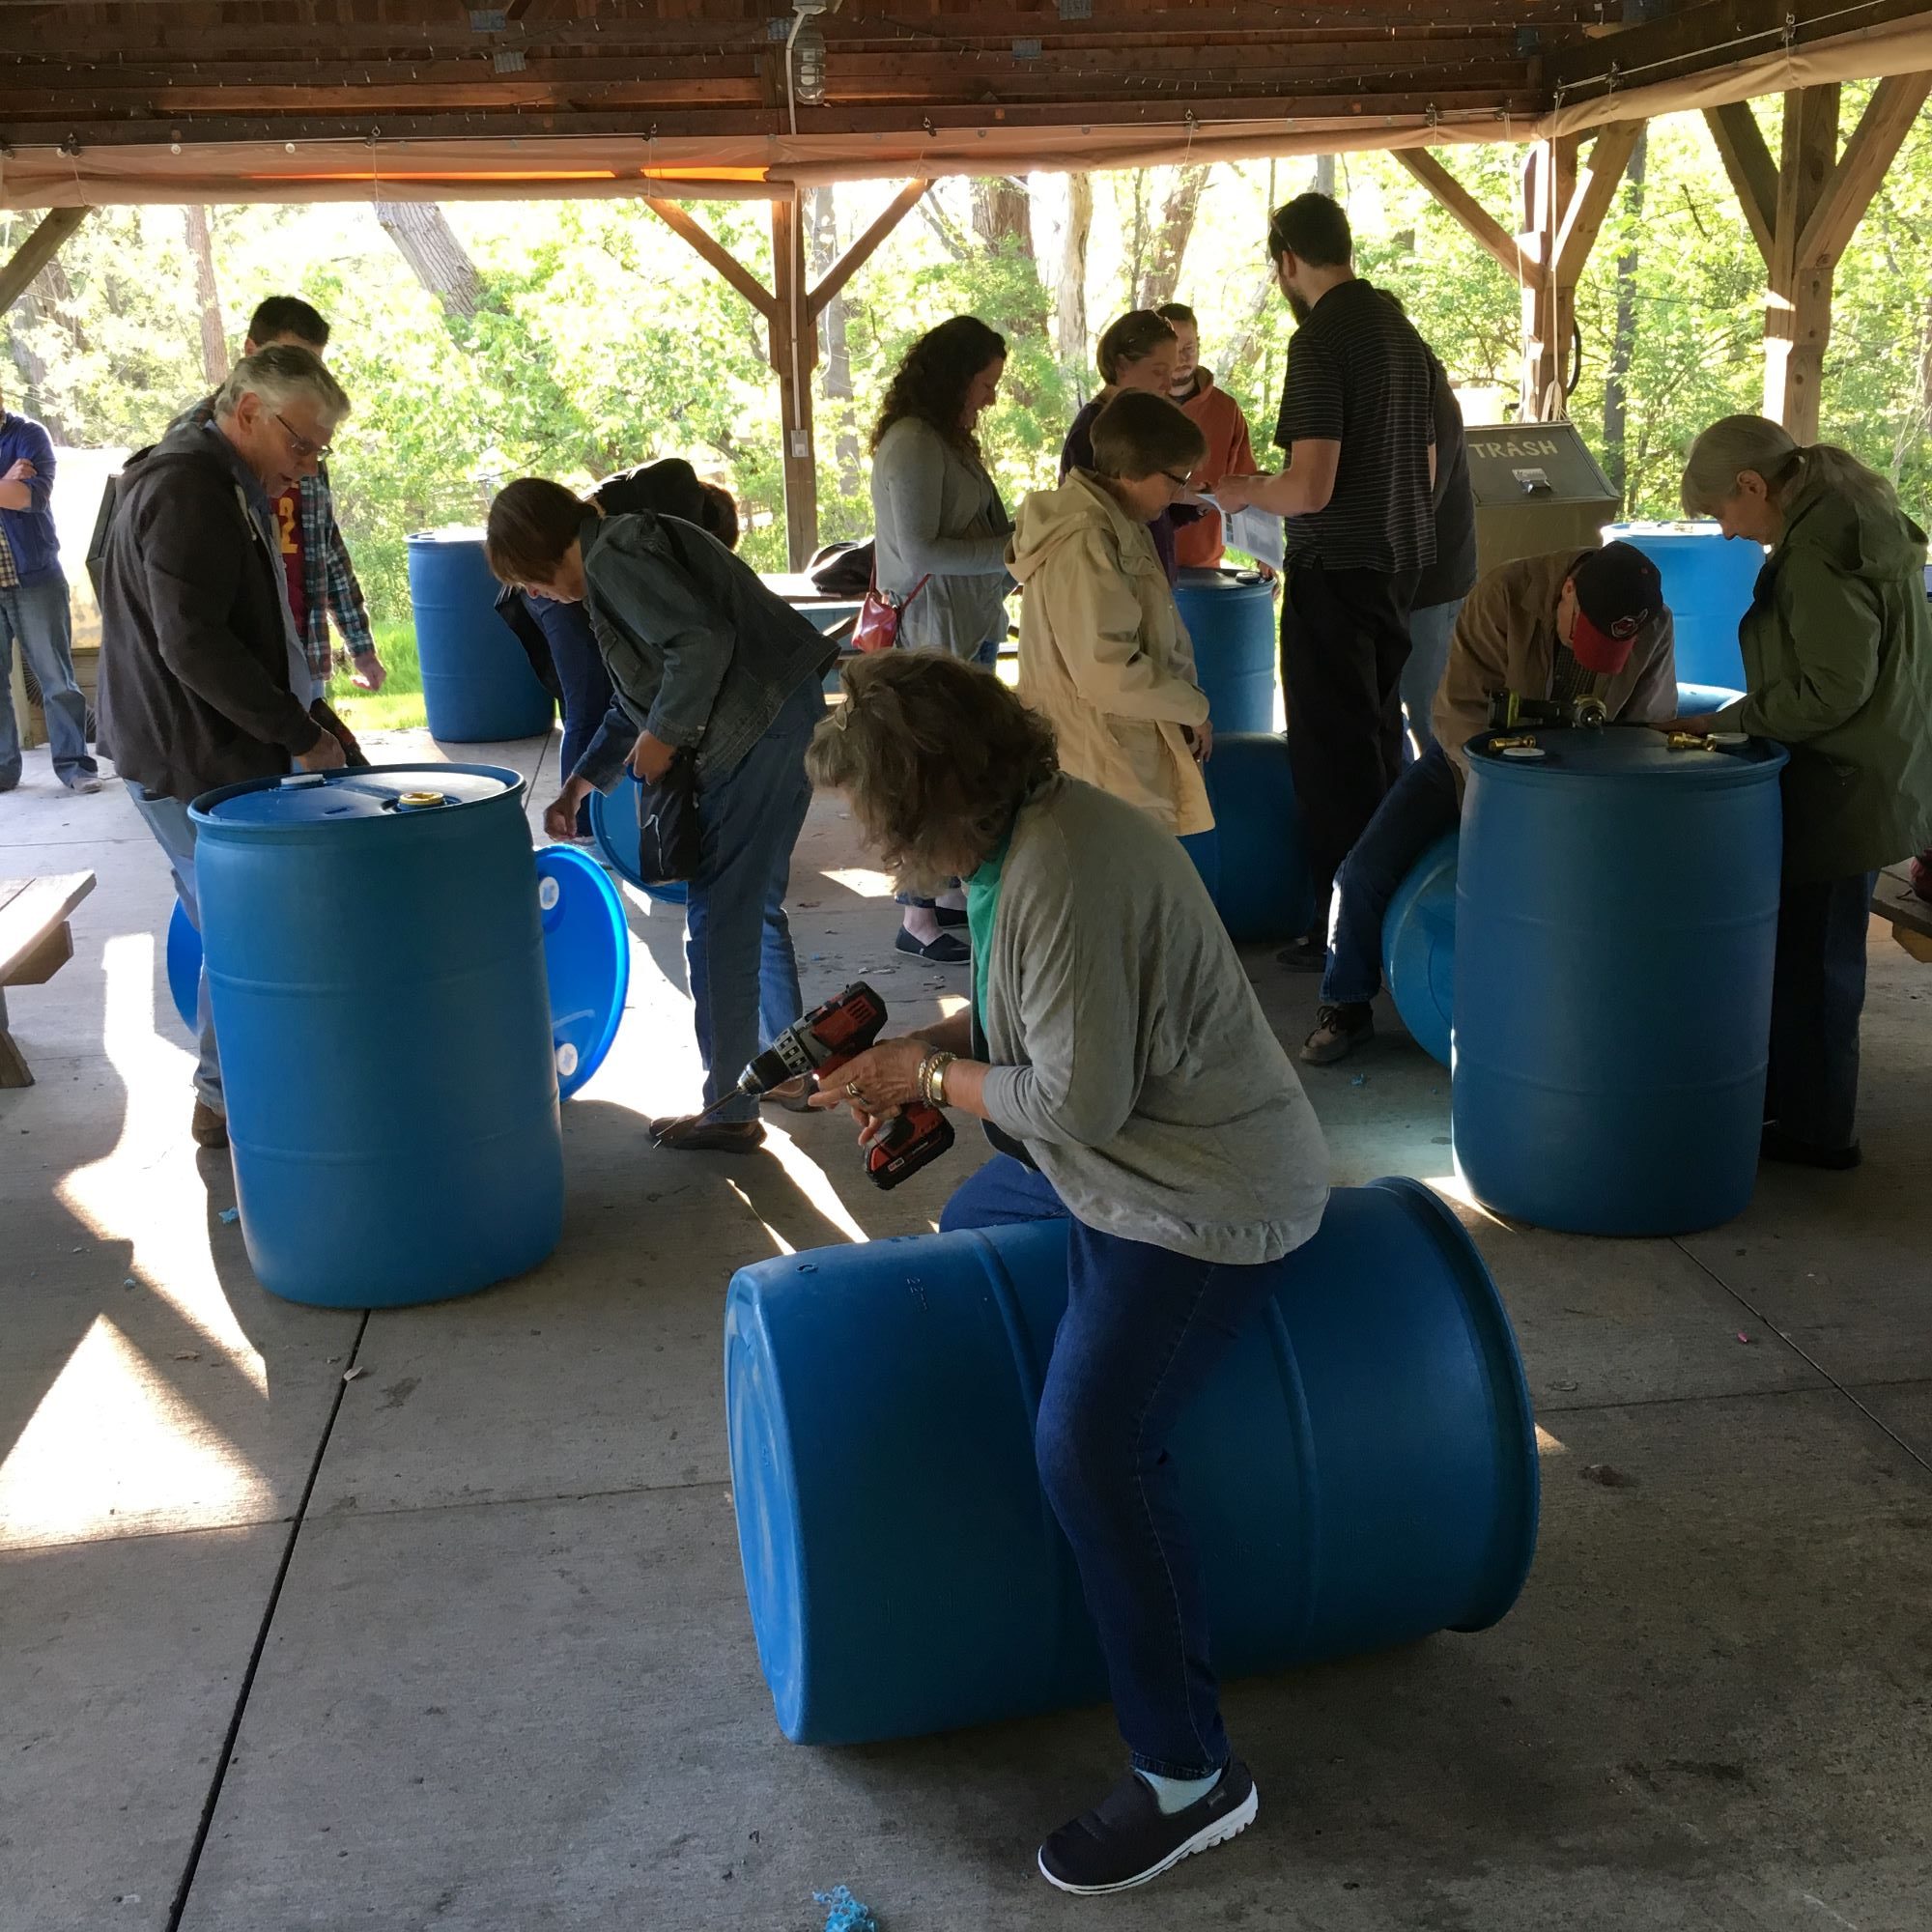 Rain Barrel Workshop at the Nature Center at Shaker Lakes